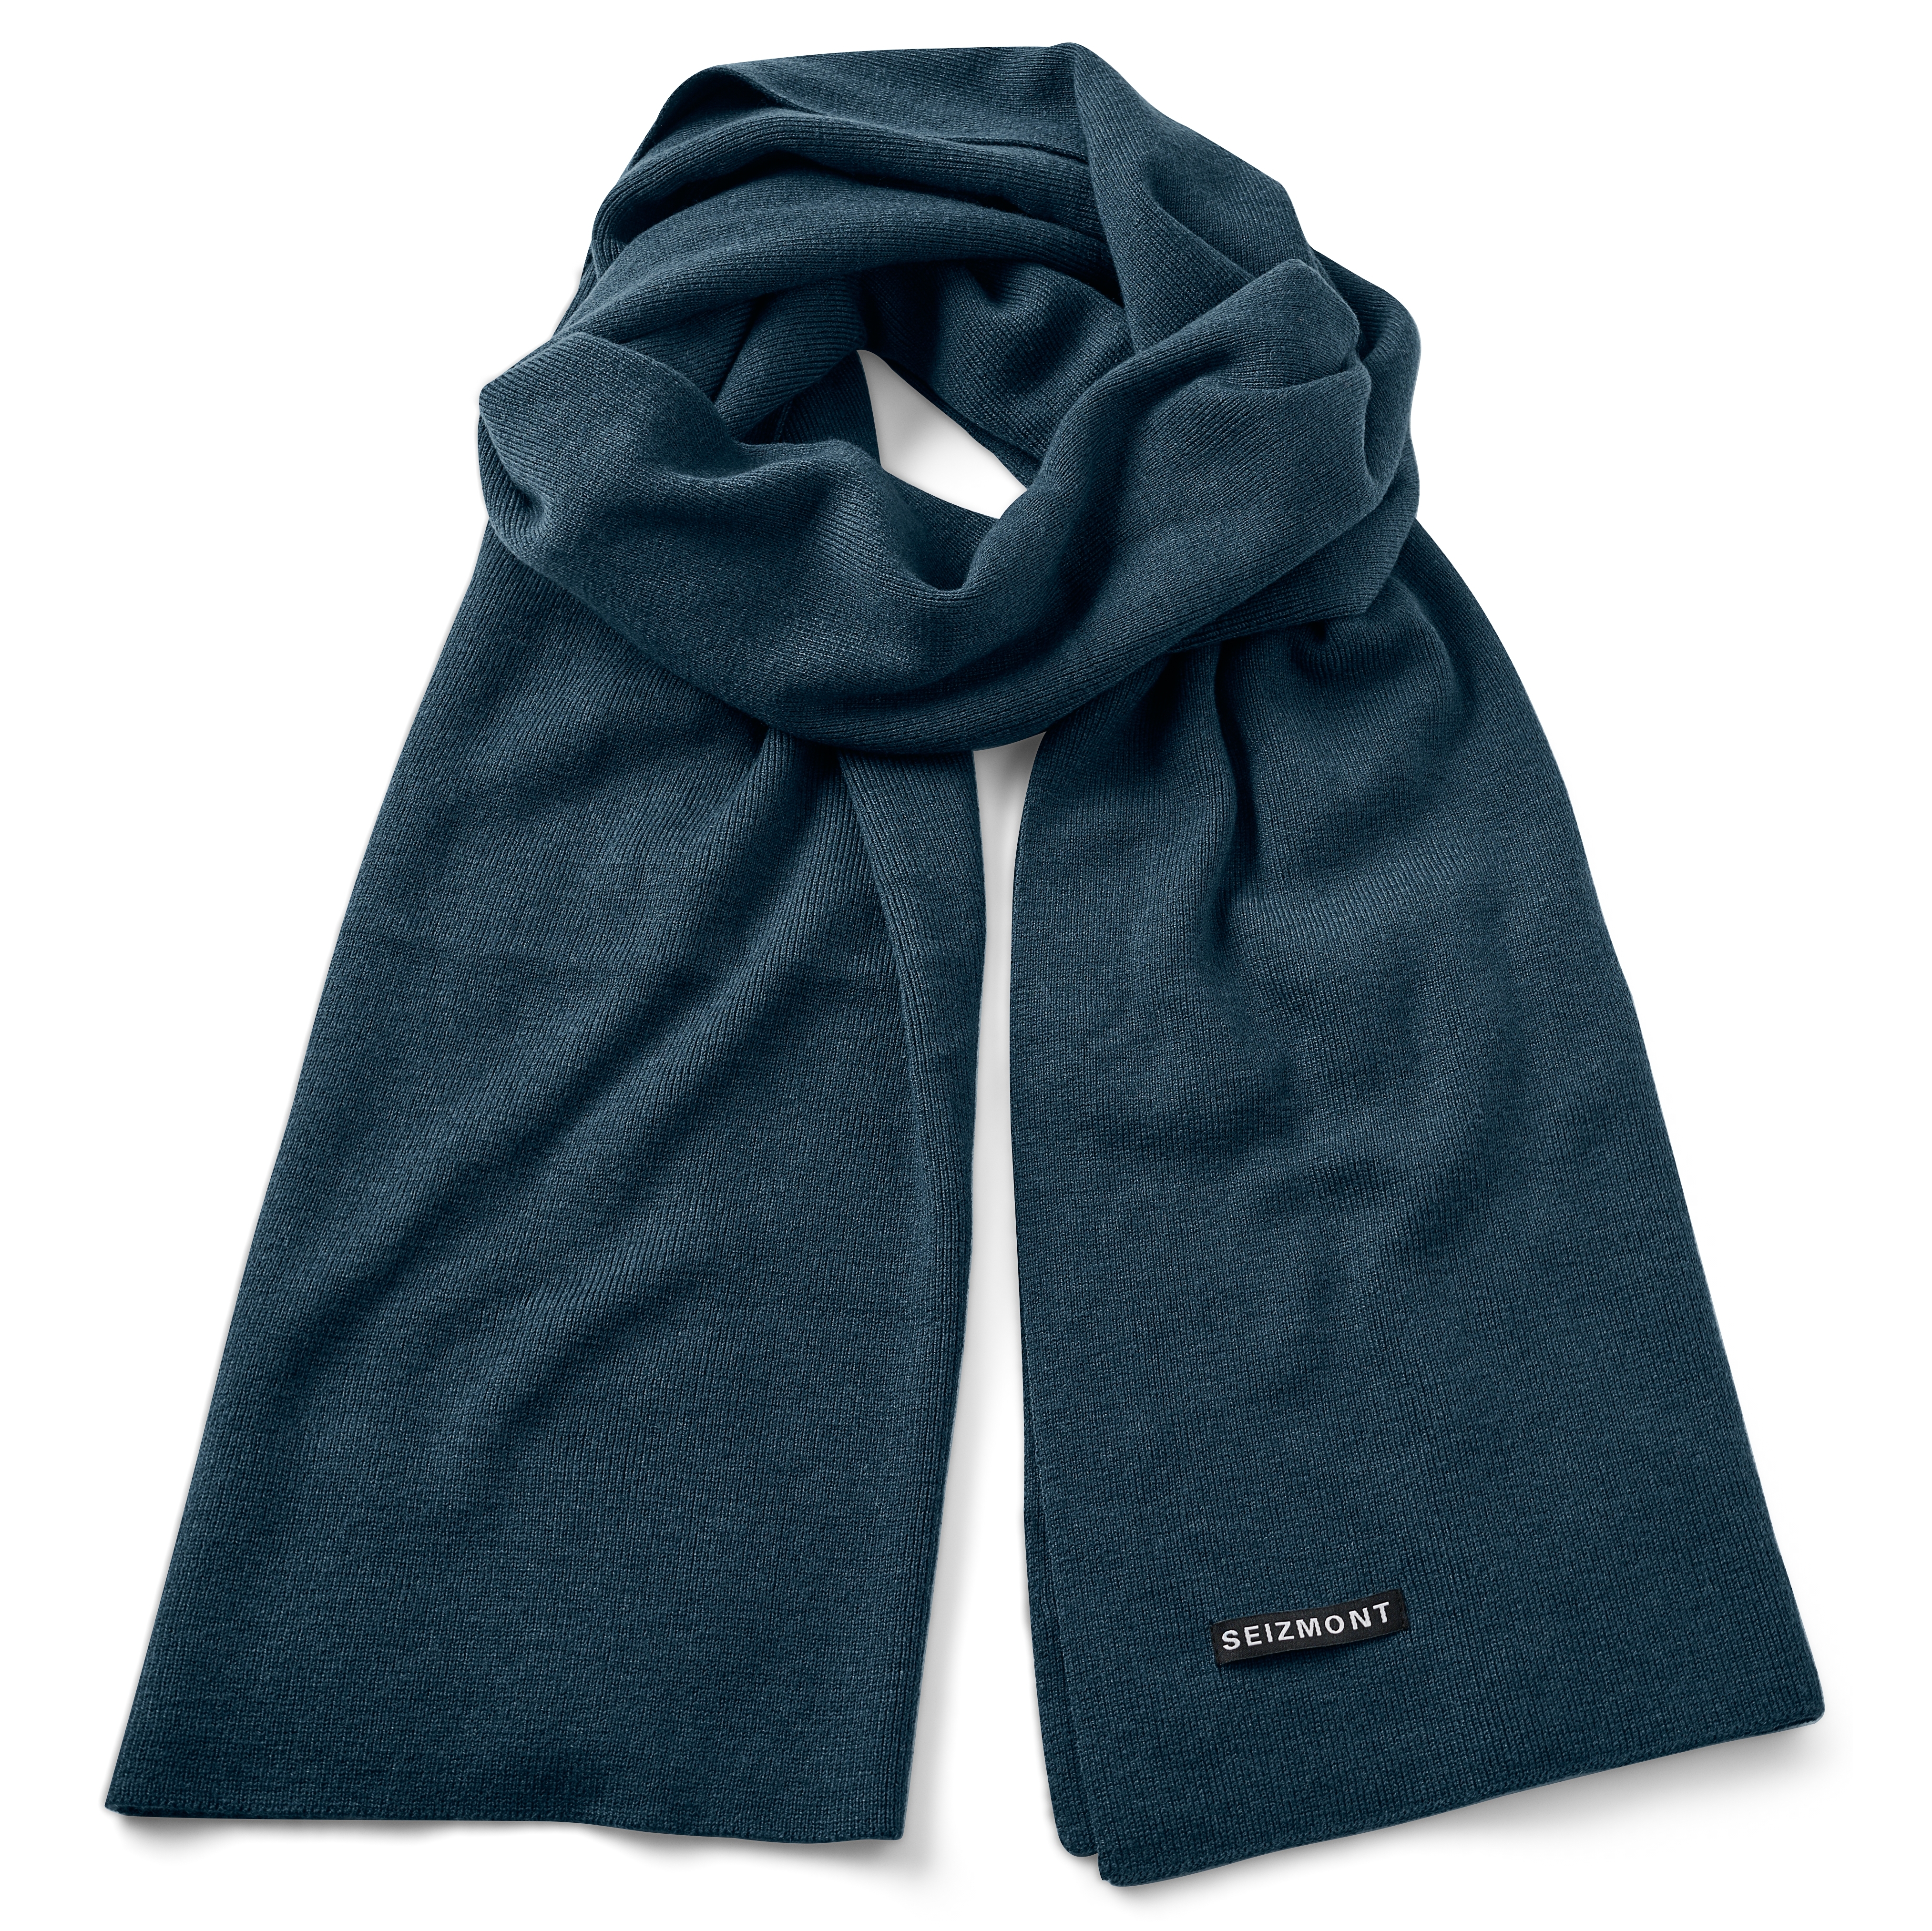 Hiems | Blue Wool-blend Scarf | In Seizmont | stock